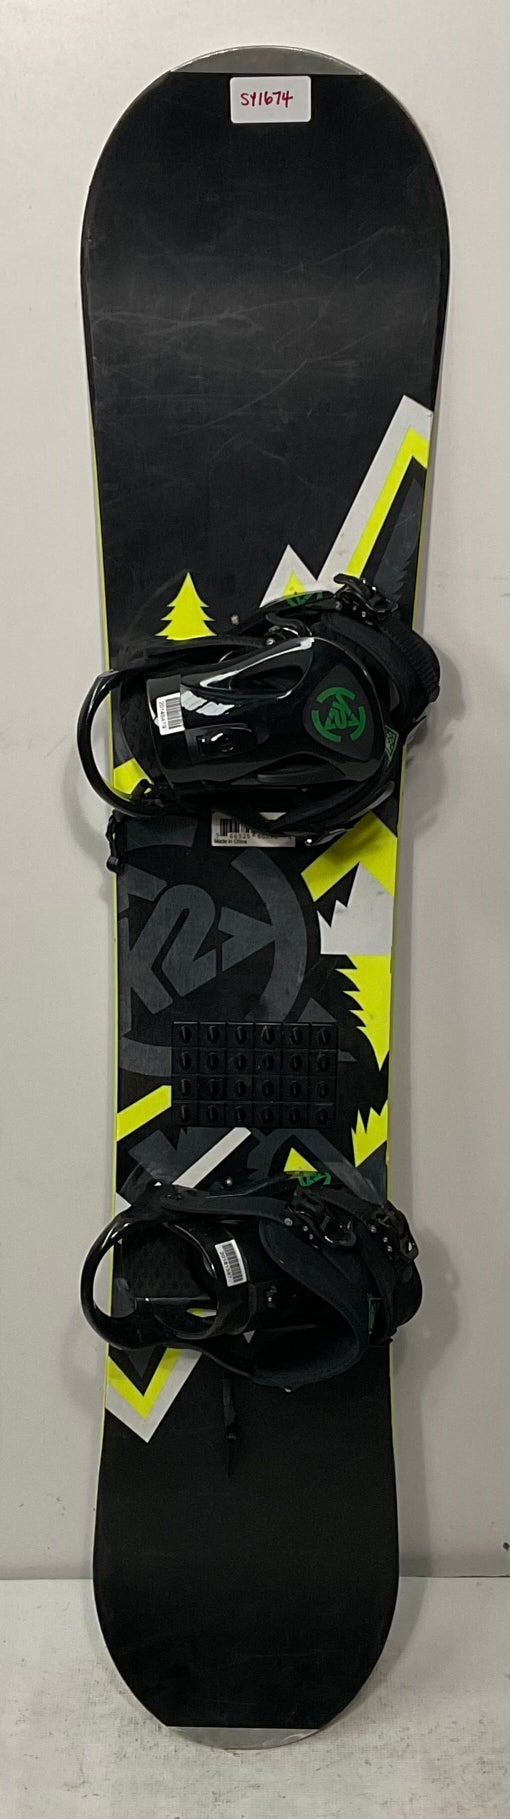 Used K2 145cm Snowboard With K2 Bindings (SY1674)